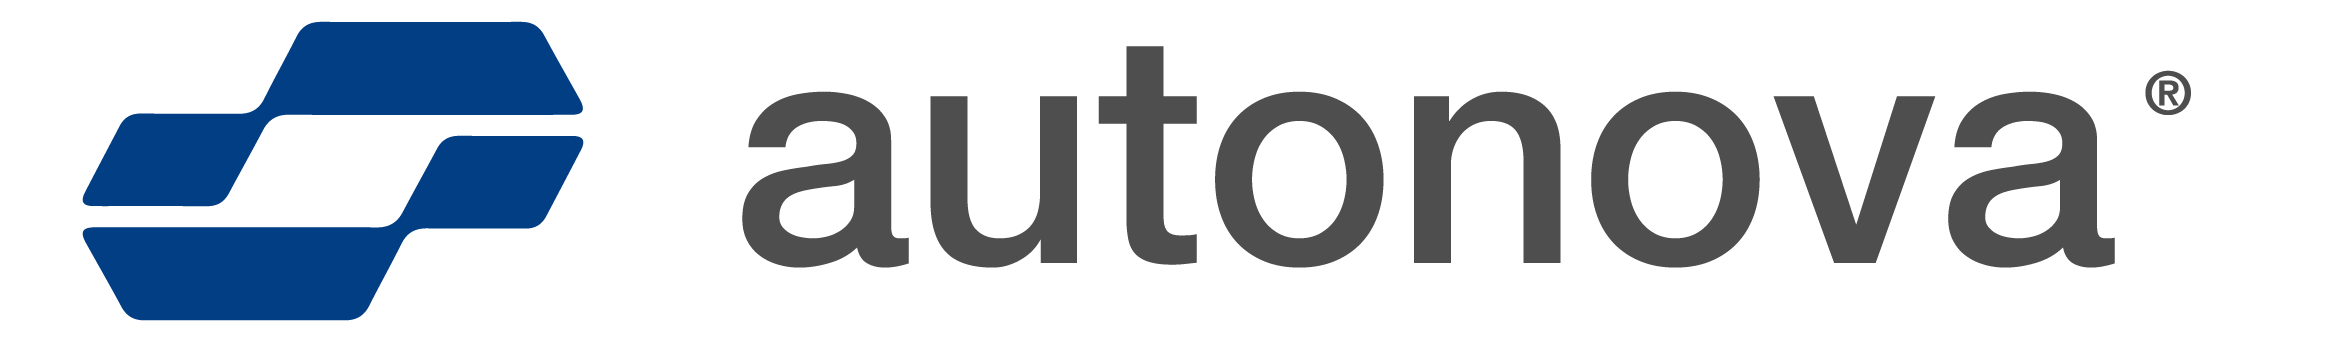 cropped-logo-autonova_2020-002.png